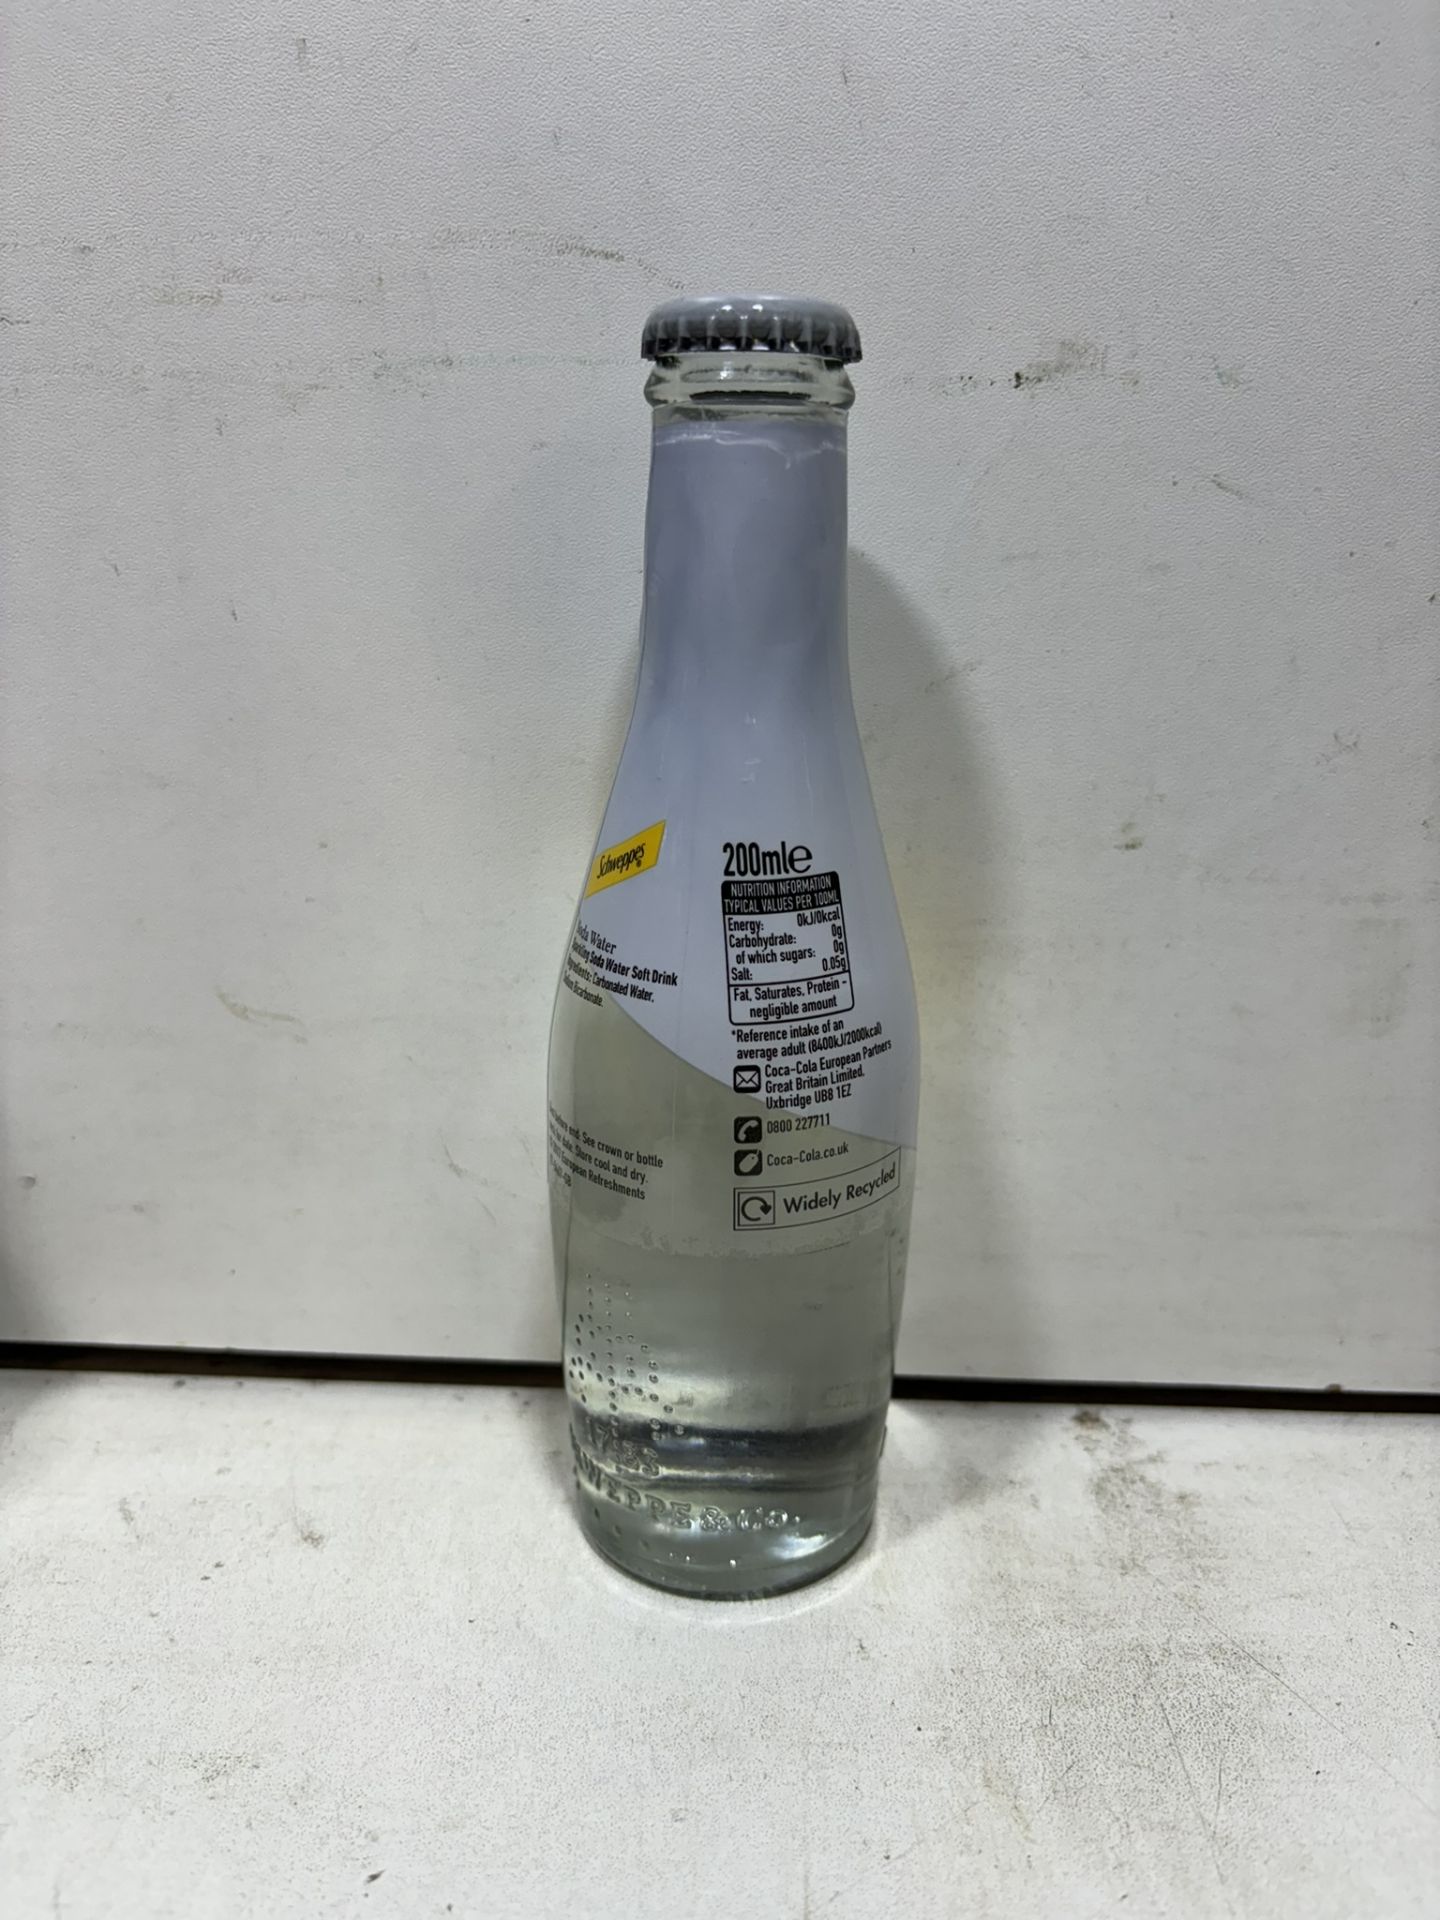 72 X Bottles Of Schweppes Soda Water, 200Ml - Image 2 of 4